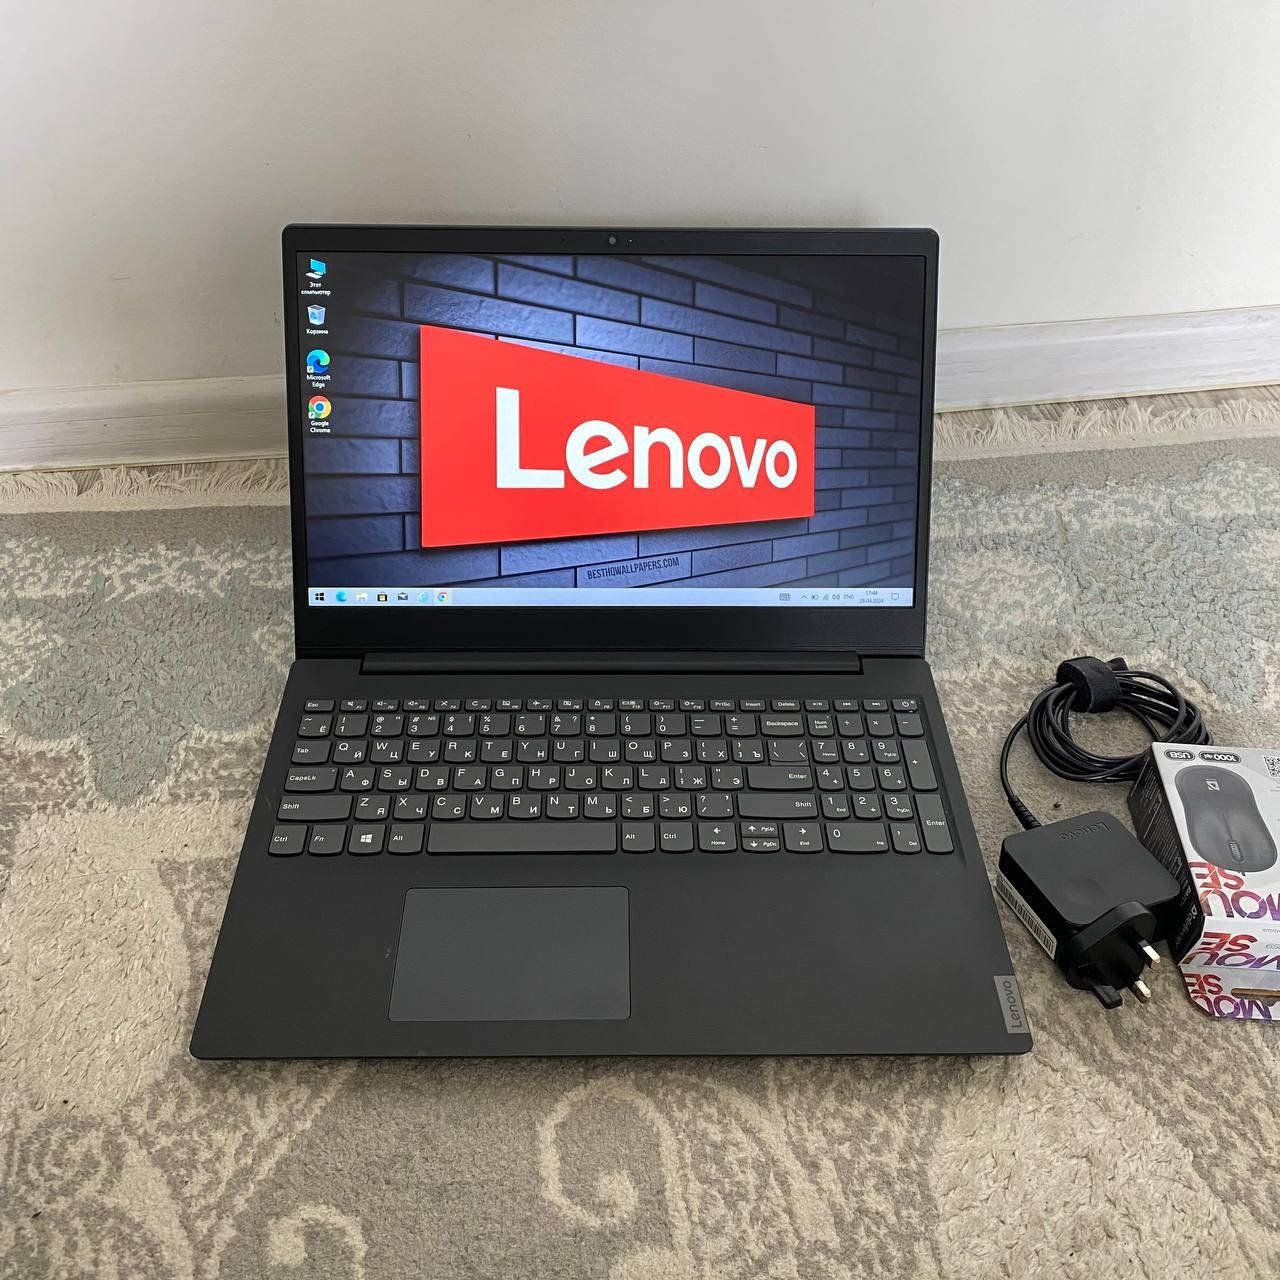 Lenovo Ideapad/Память-1000GB/ОЗУ-4GB/Windows 10/Мышка и зарядка!